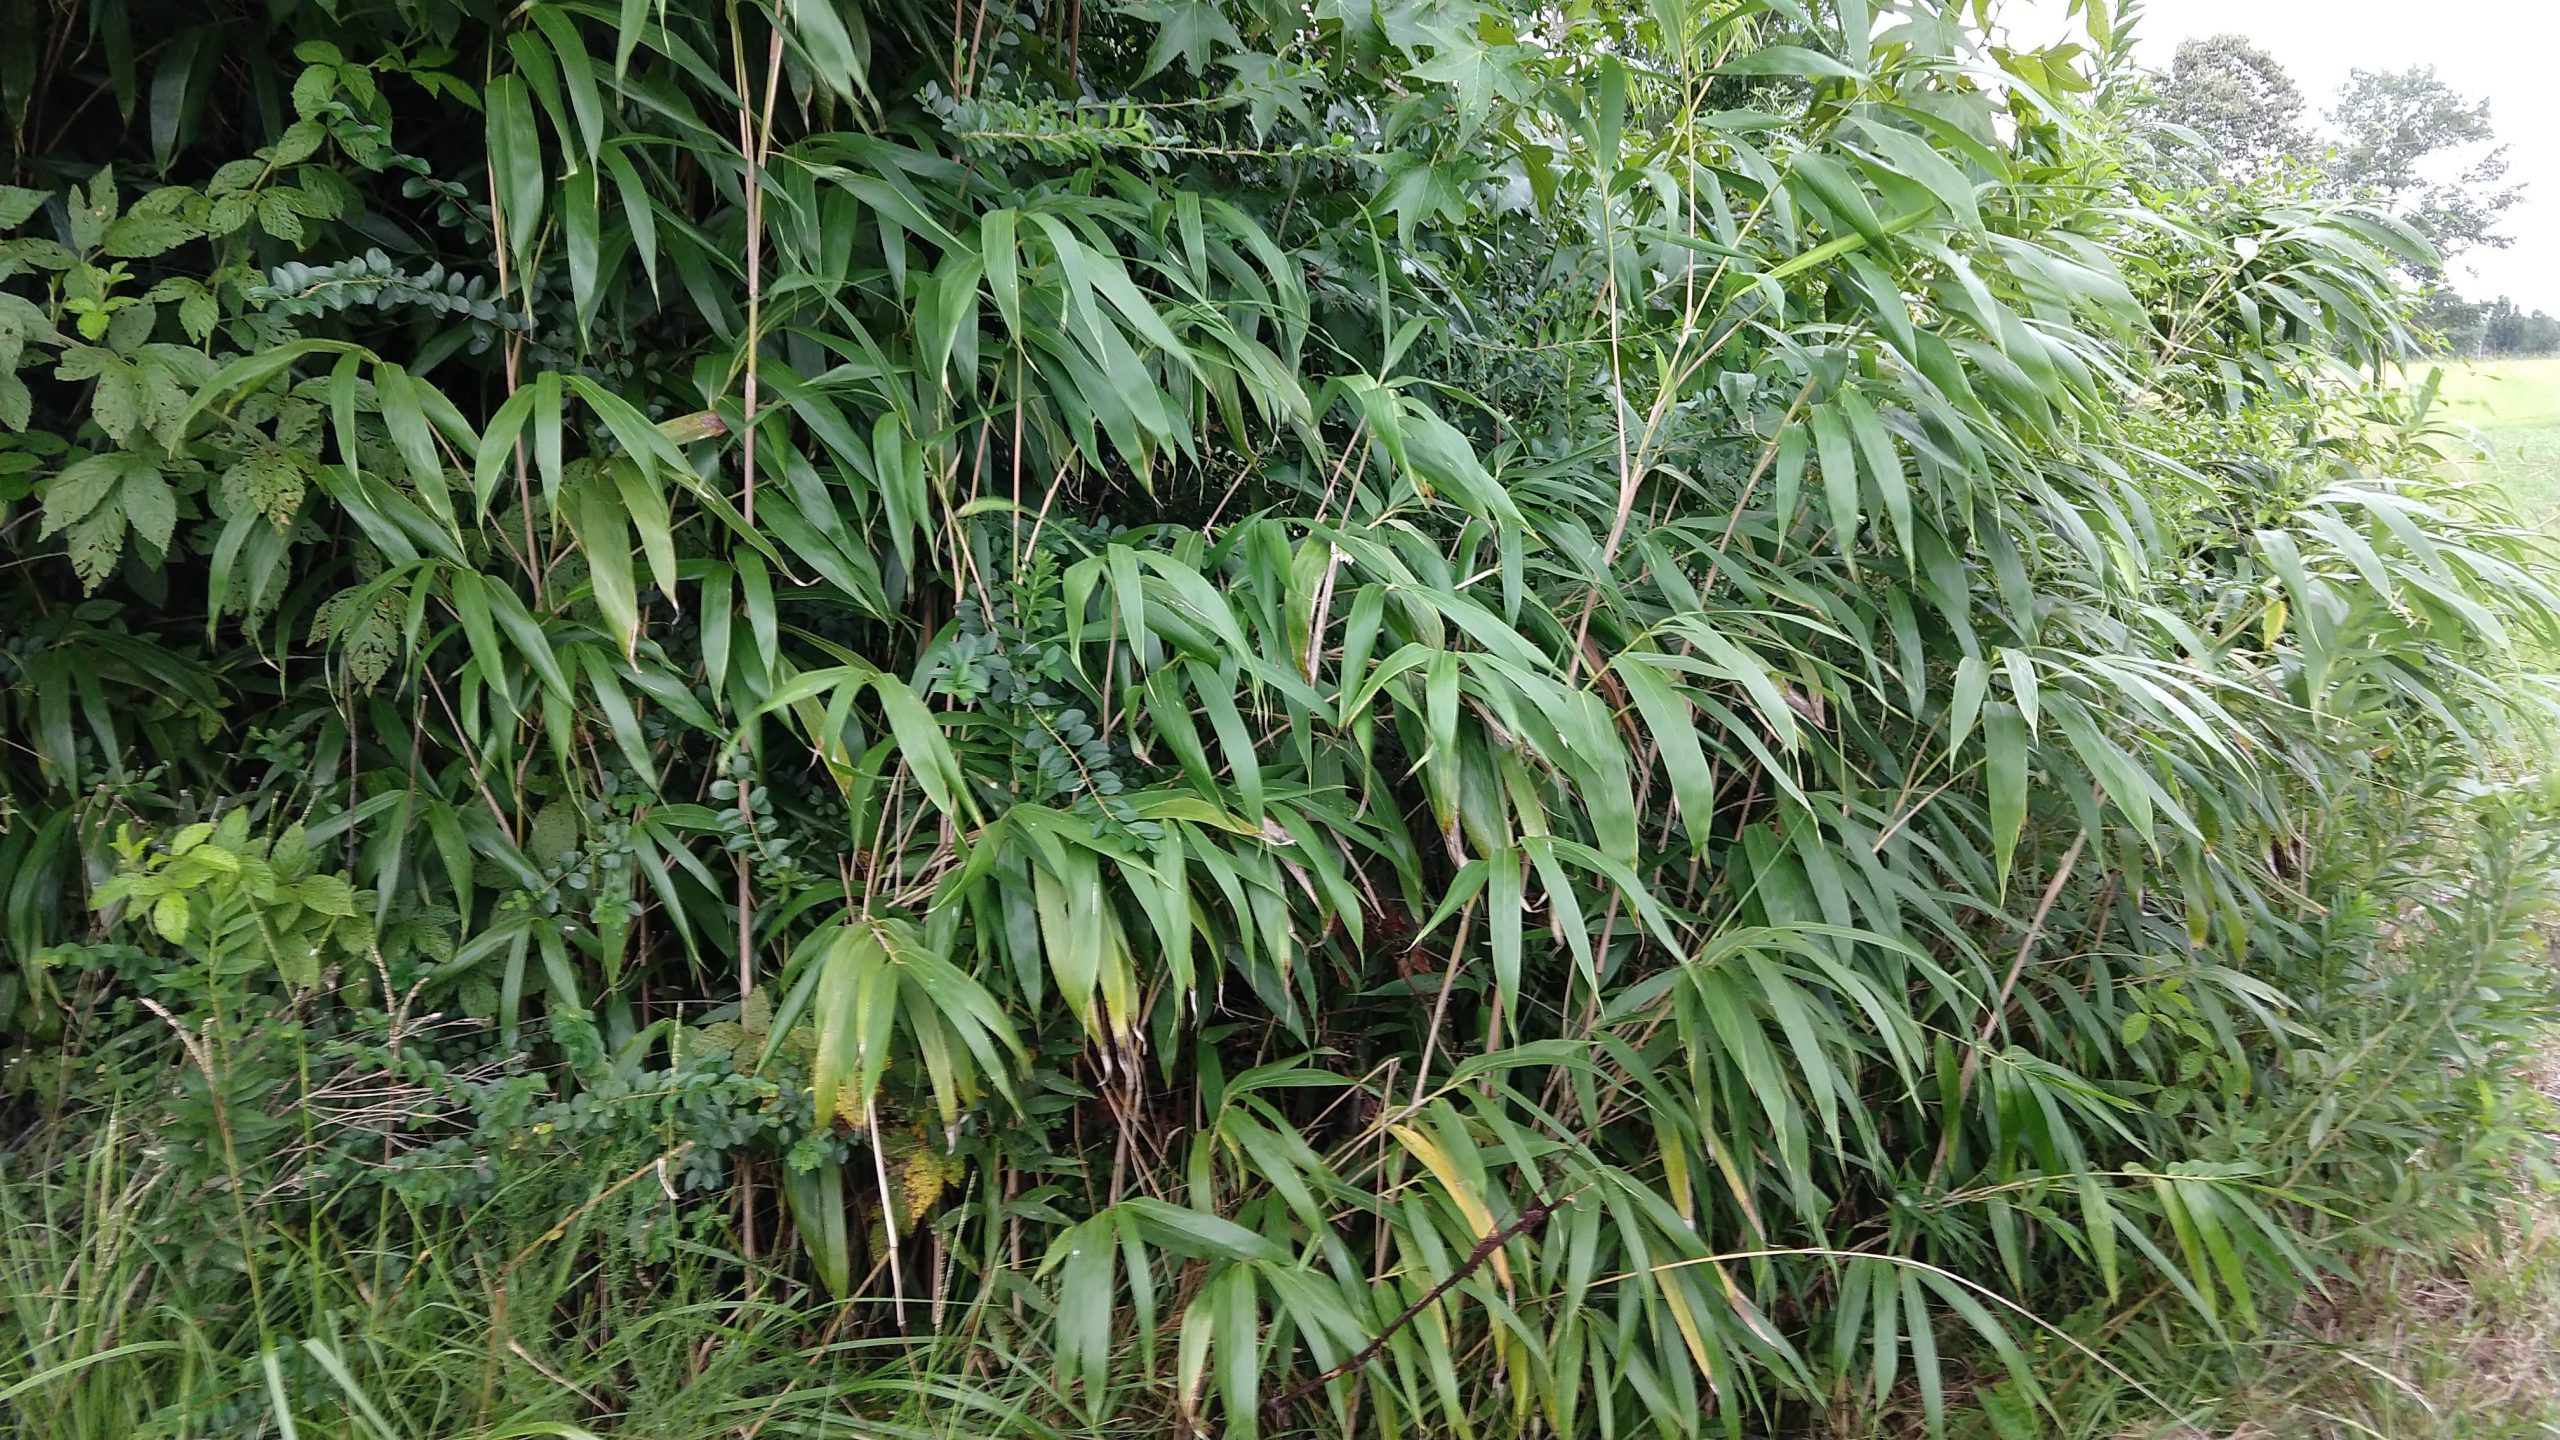 A closeup view of the river cane (Arundinaria gigantea)plants.